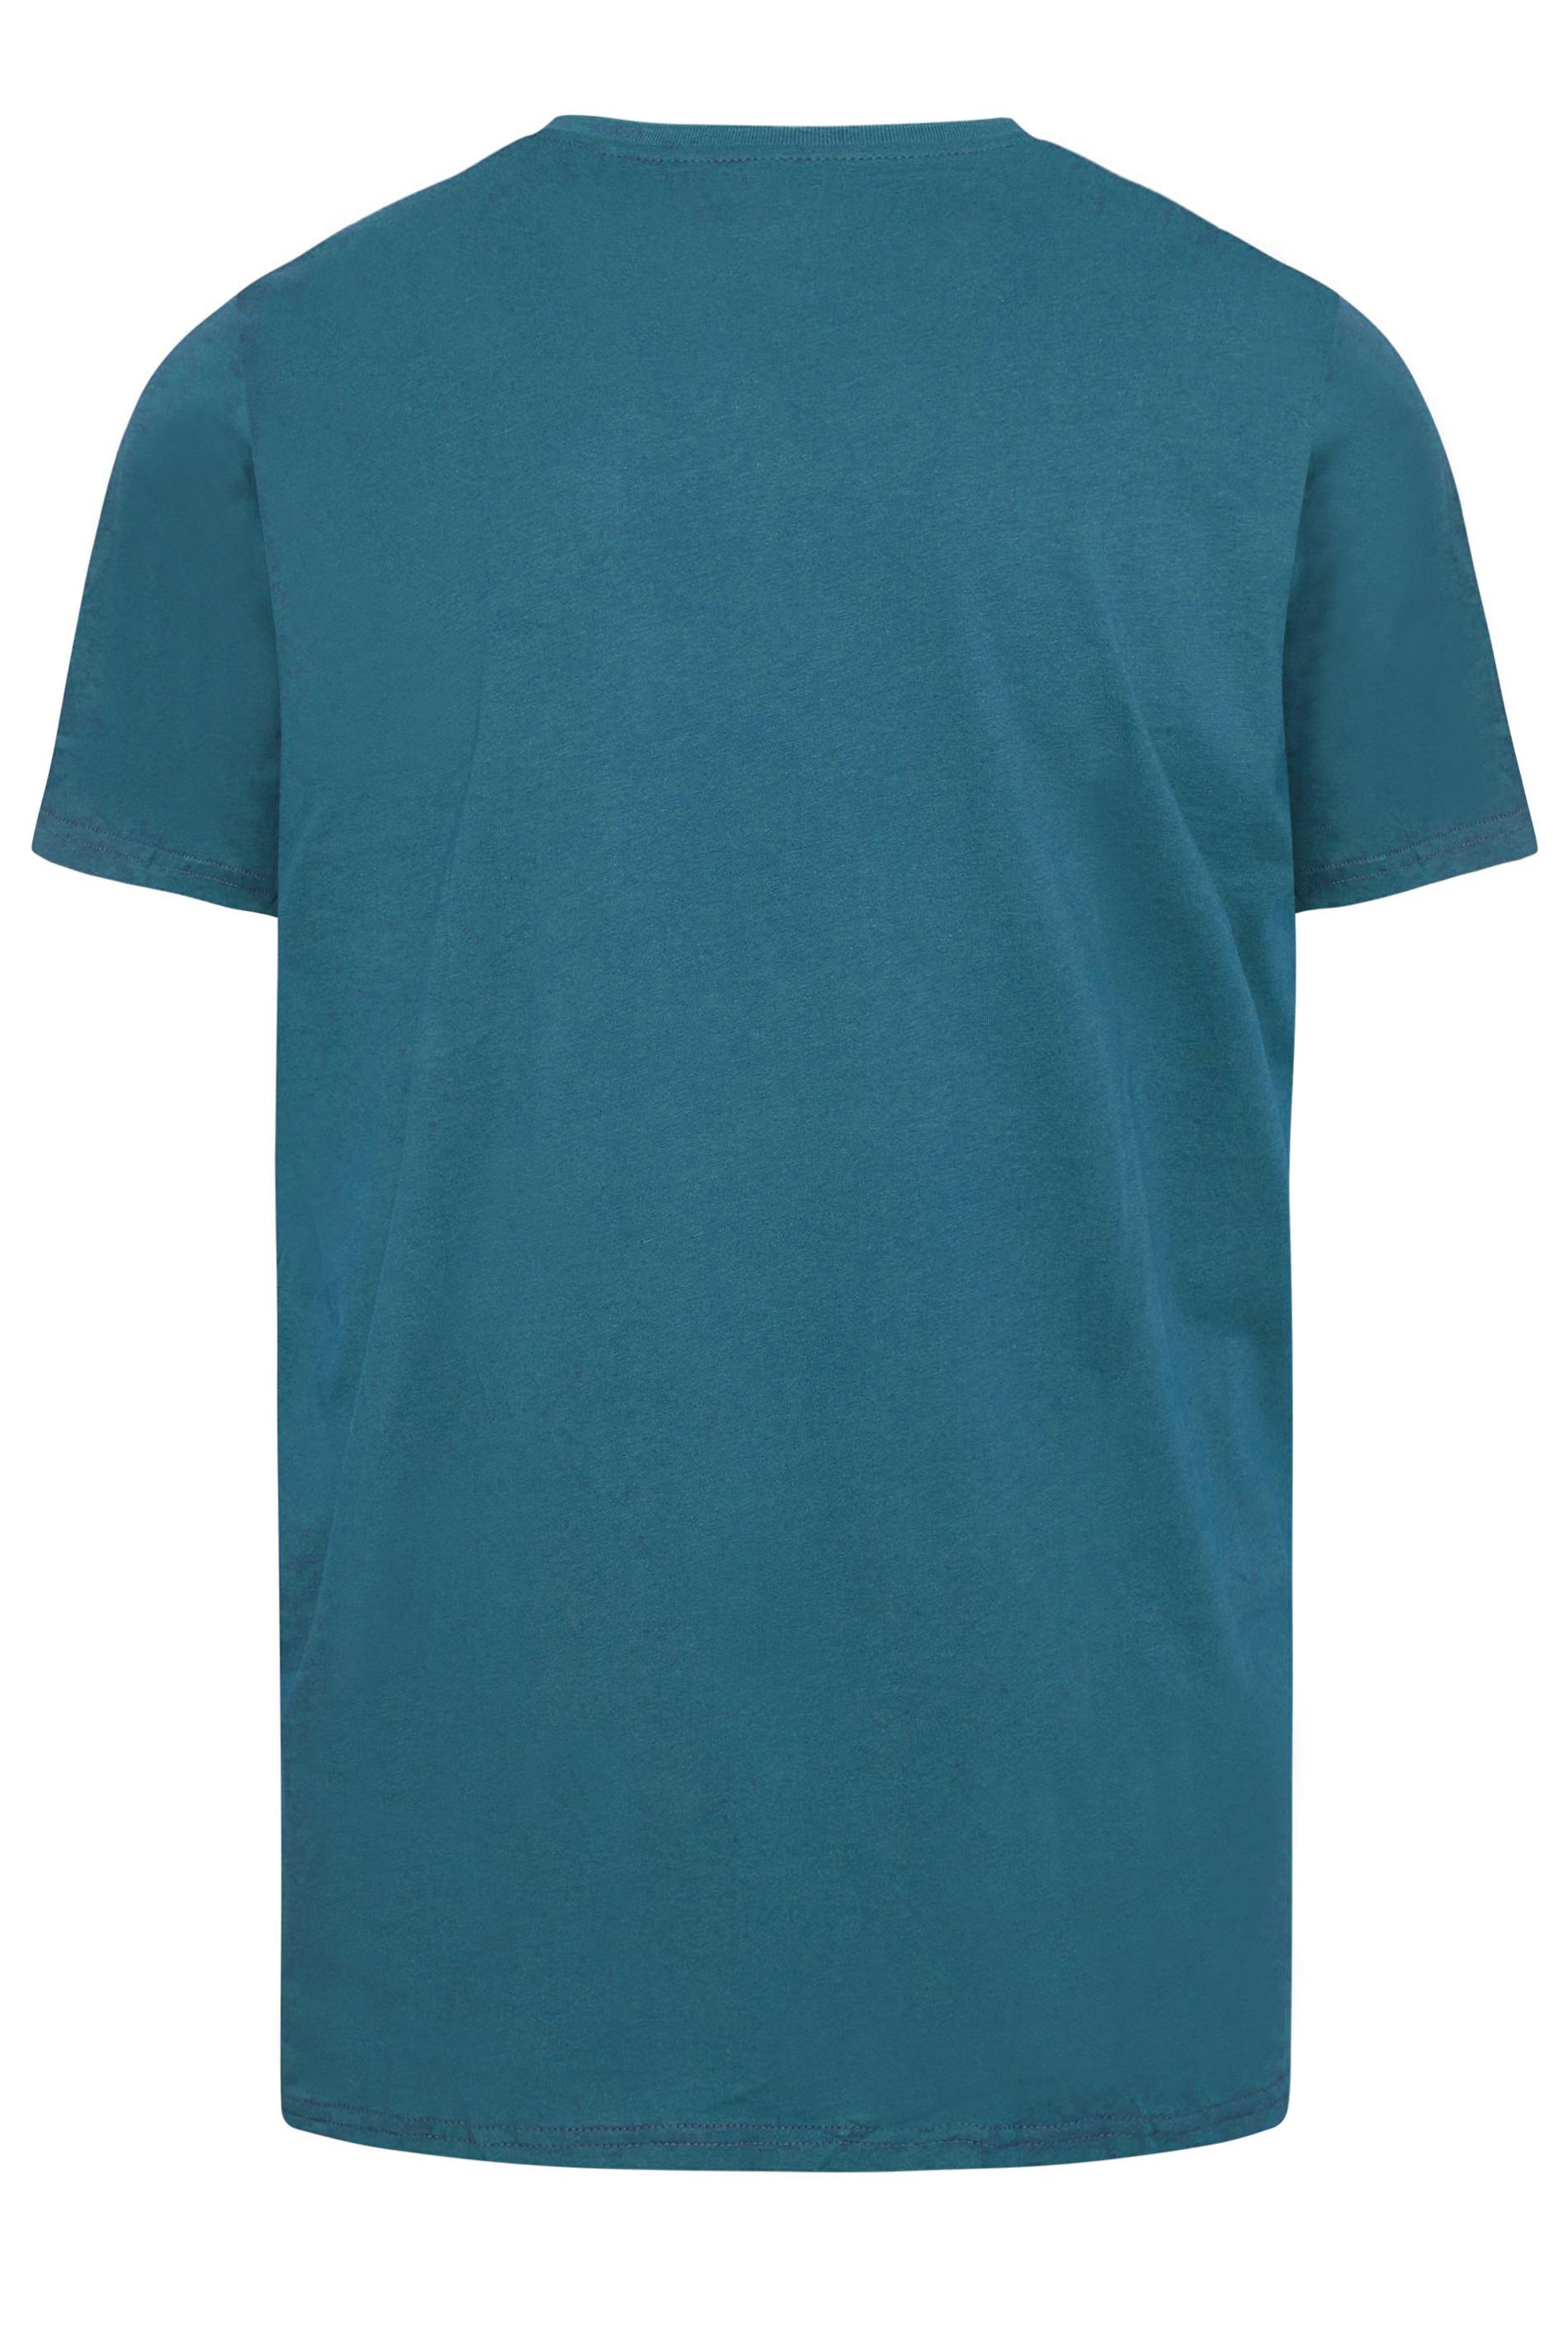 BadRhino For Less Ocean Blue T-Shirt | BadRhino 3